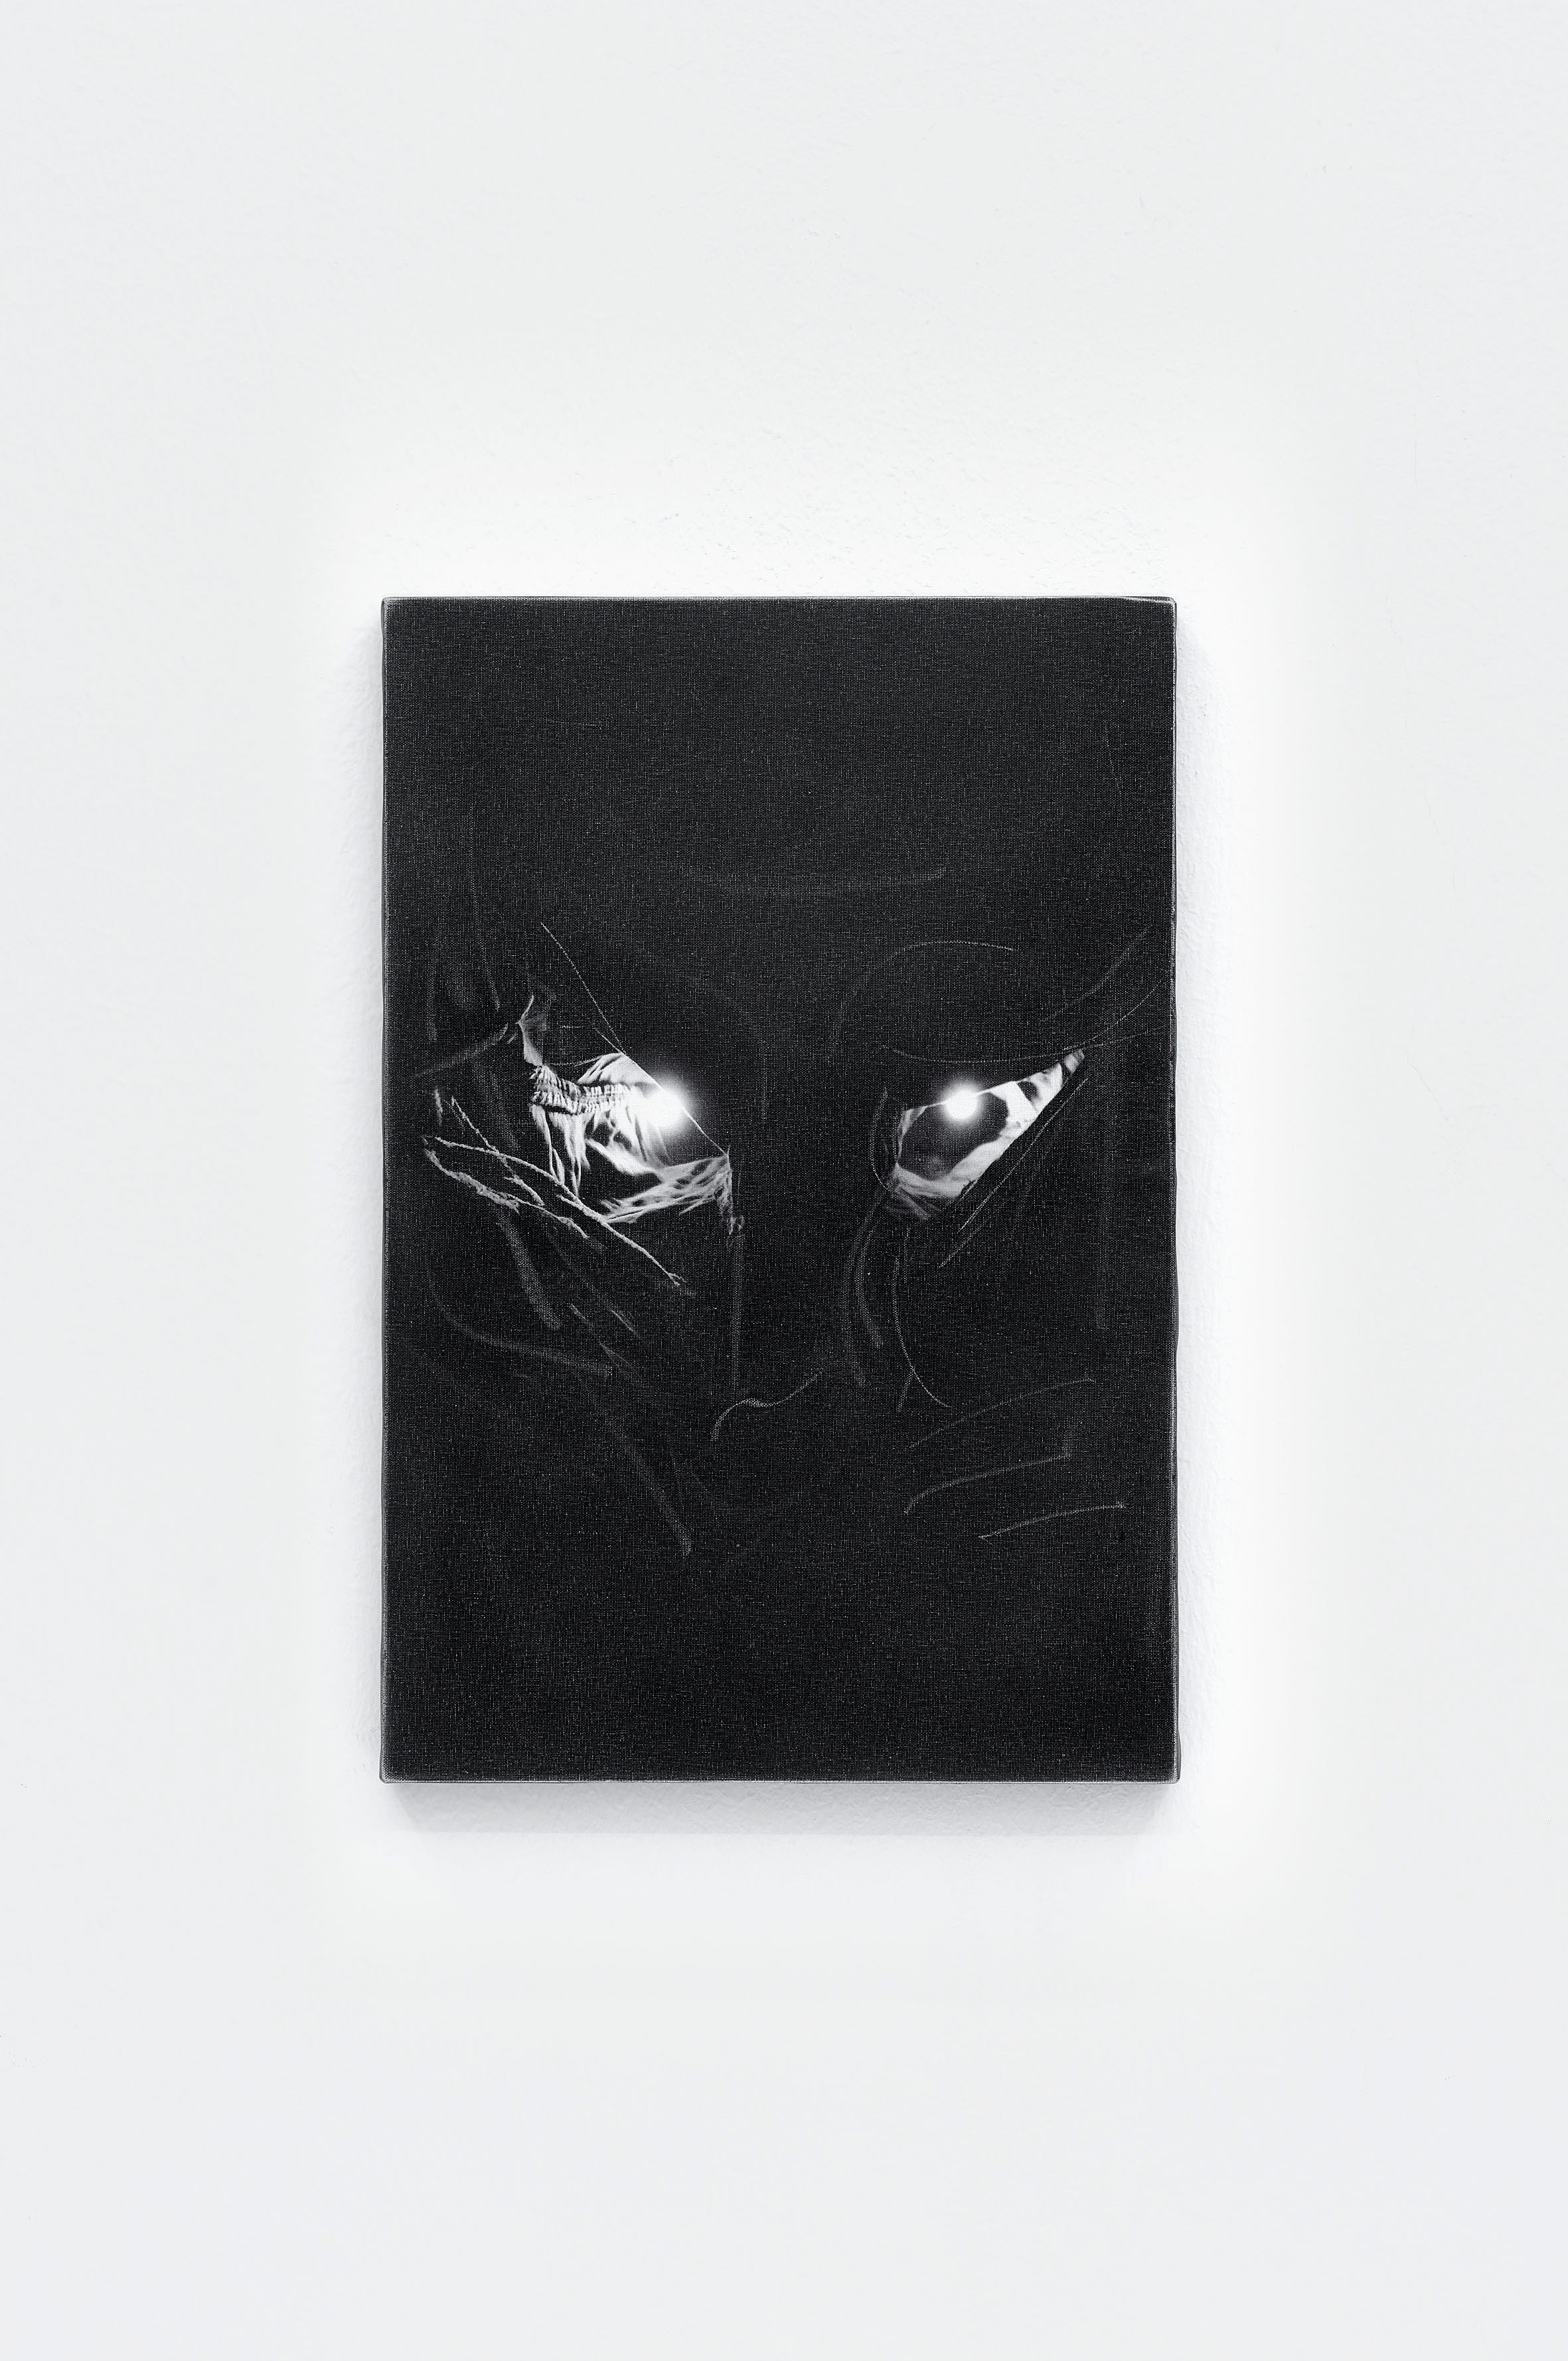 Davide Stucchi, Gap's eye, 2014